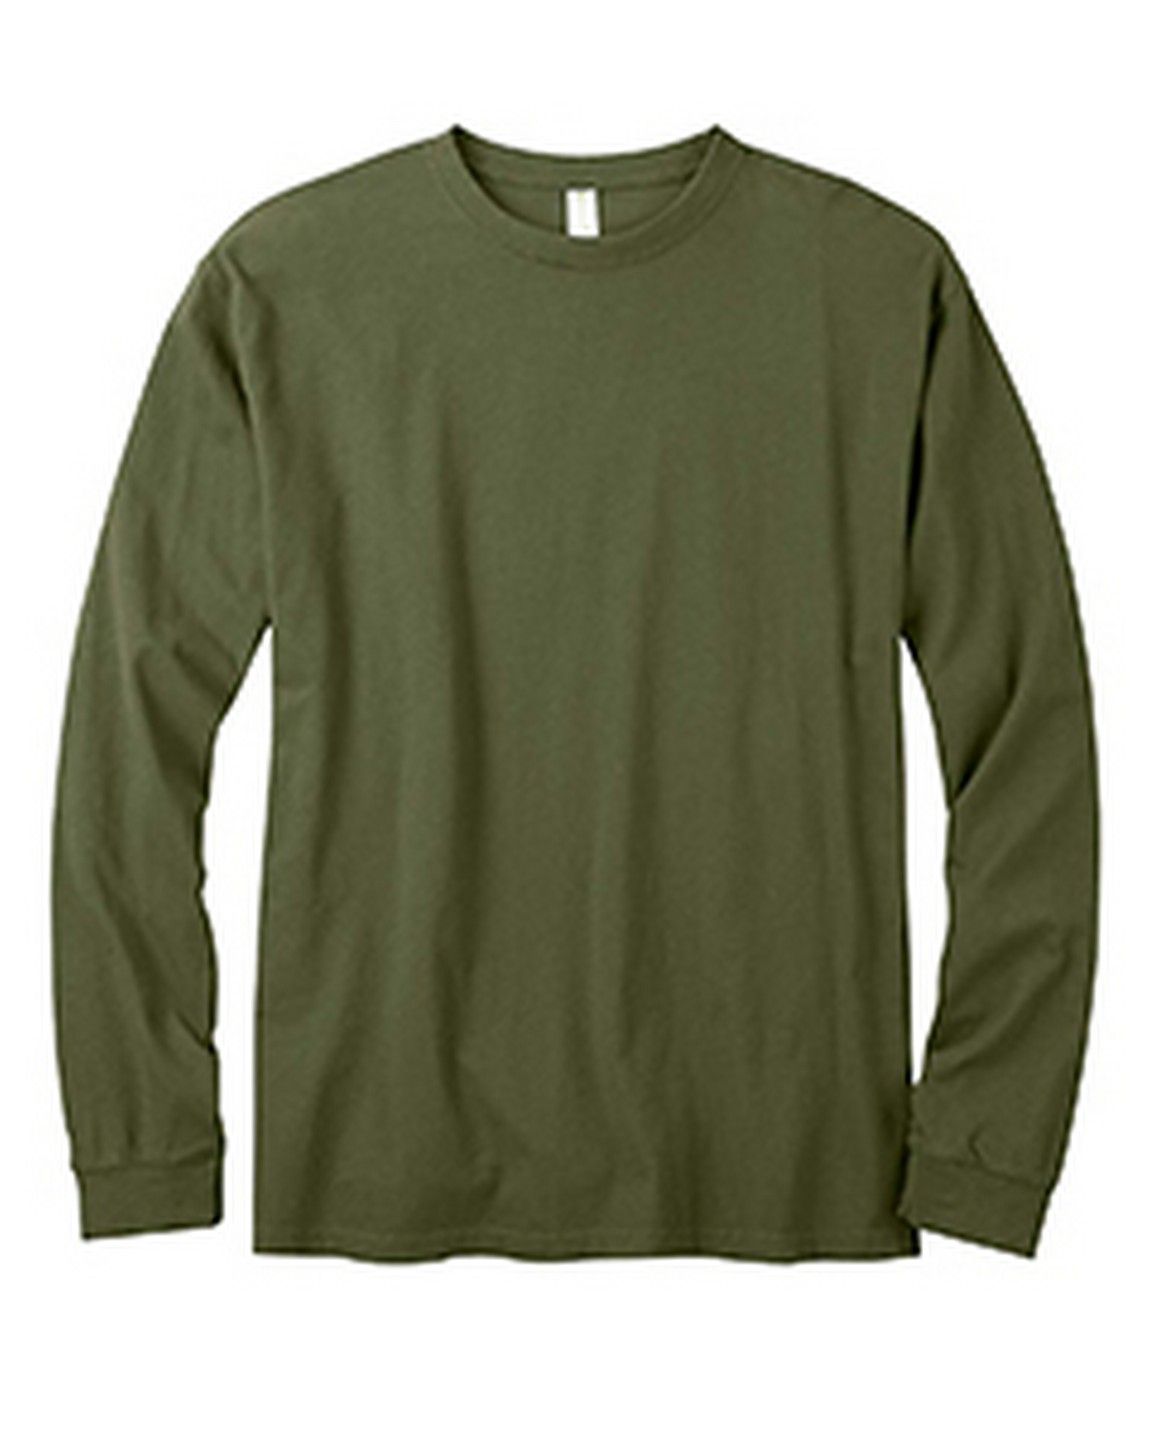 econscious EC1500 100% Organic Cotton Classic Long-Sleeve T-Shirt